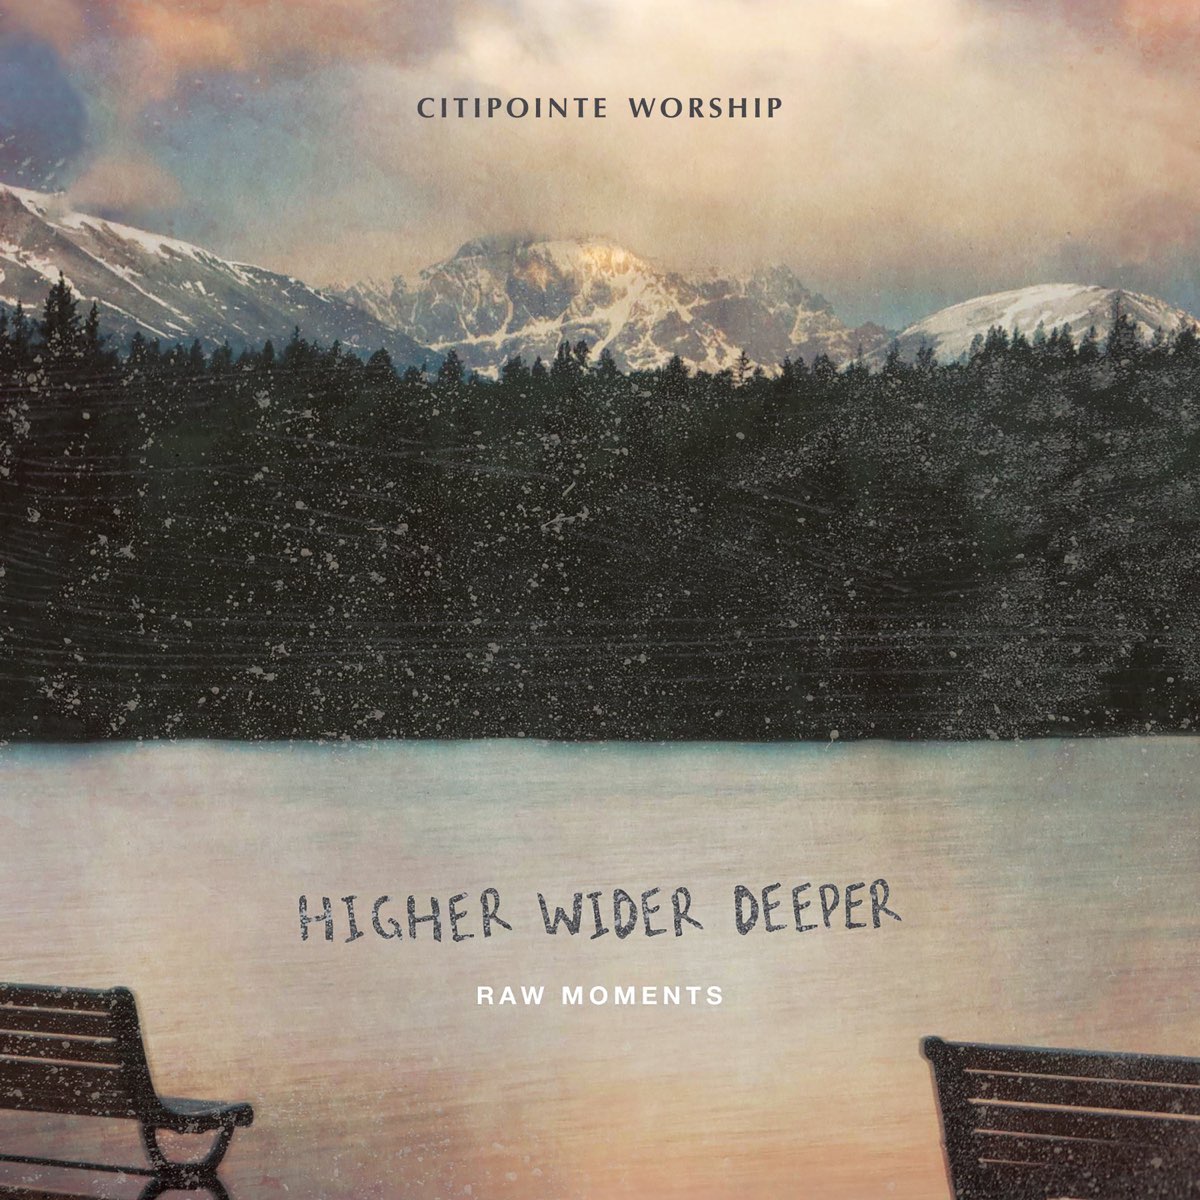 Higher wider deeper. How far we've come обложка. Worship перевод.